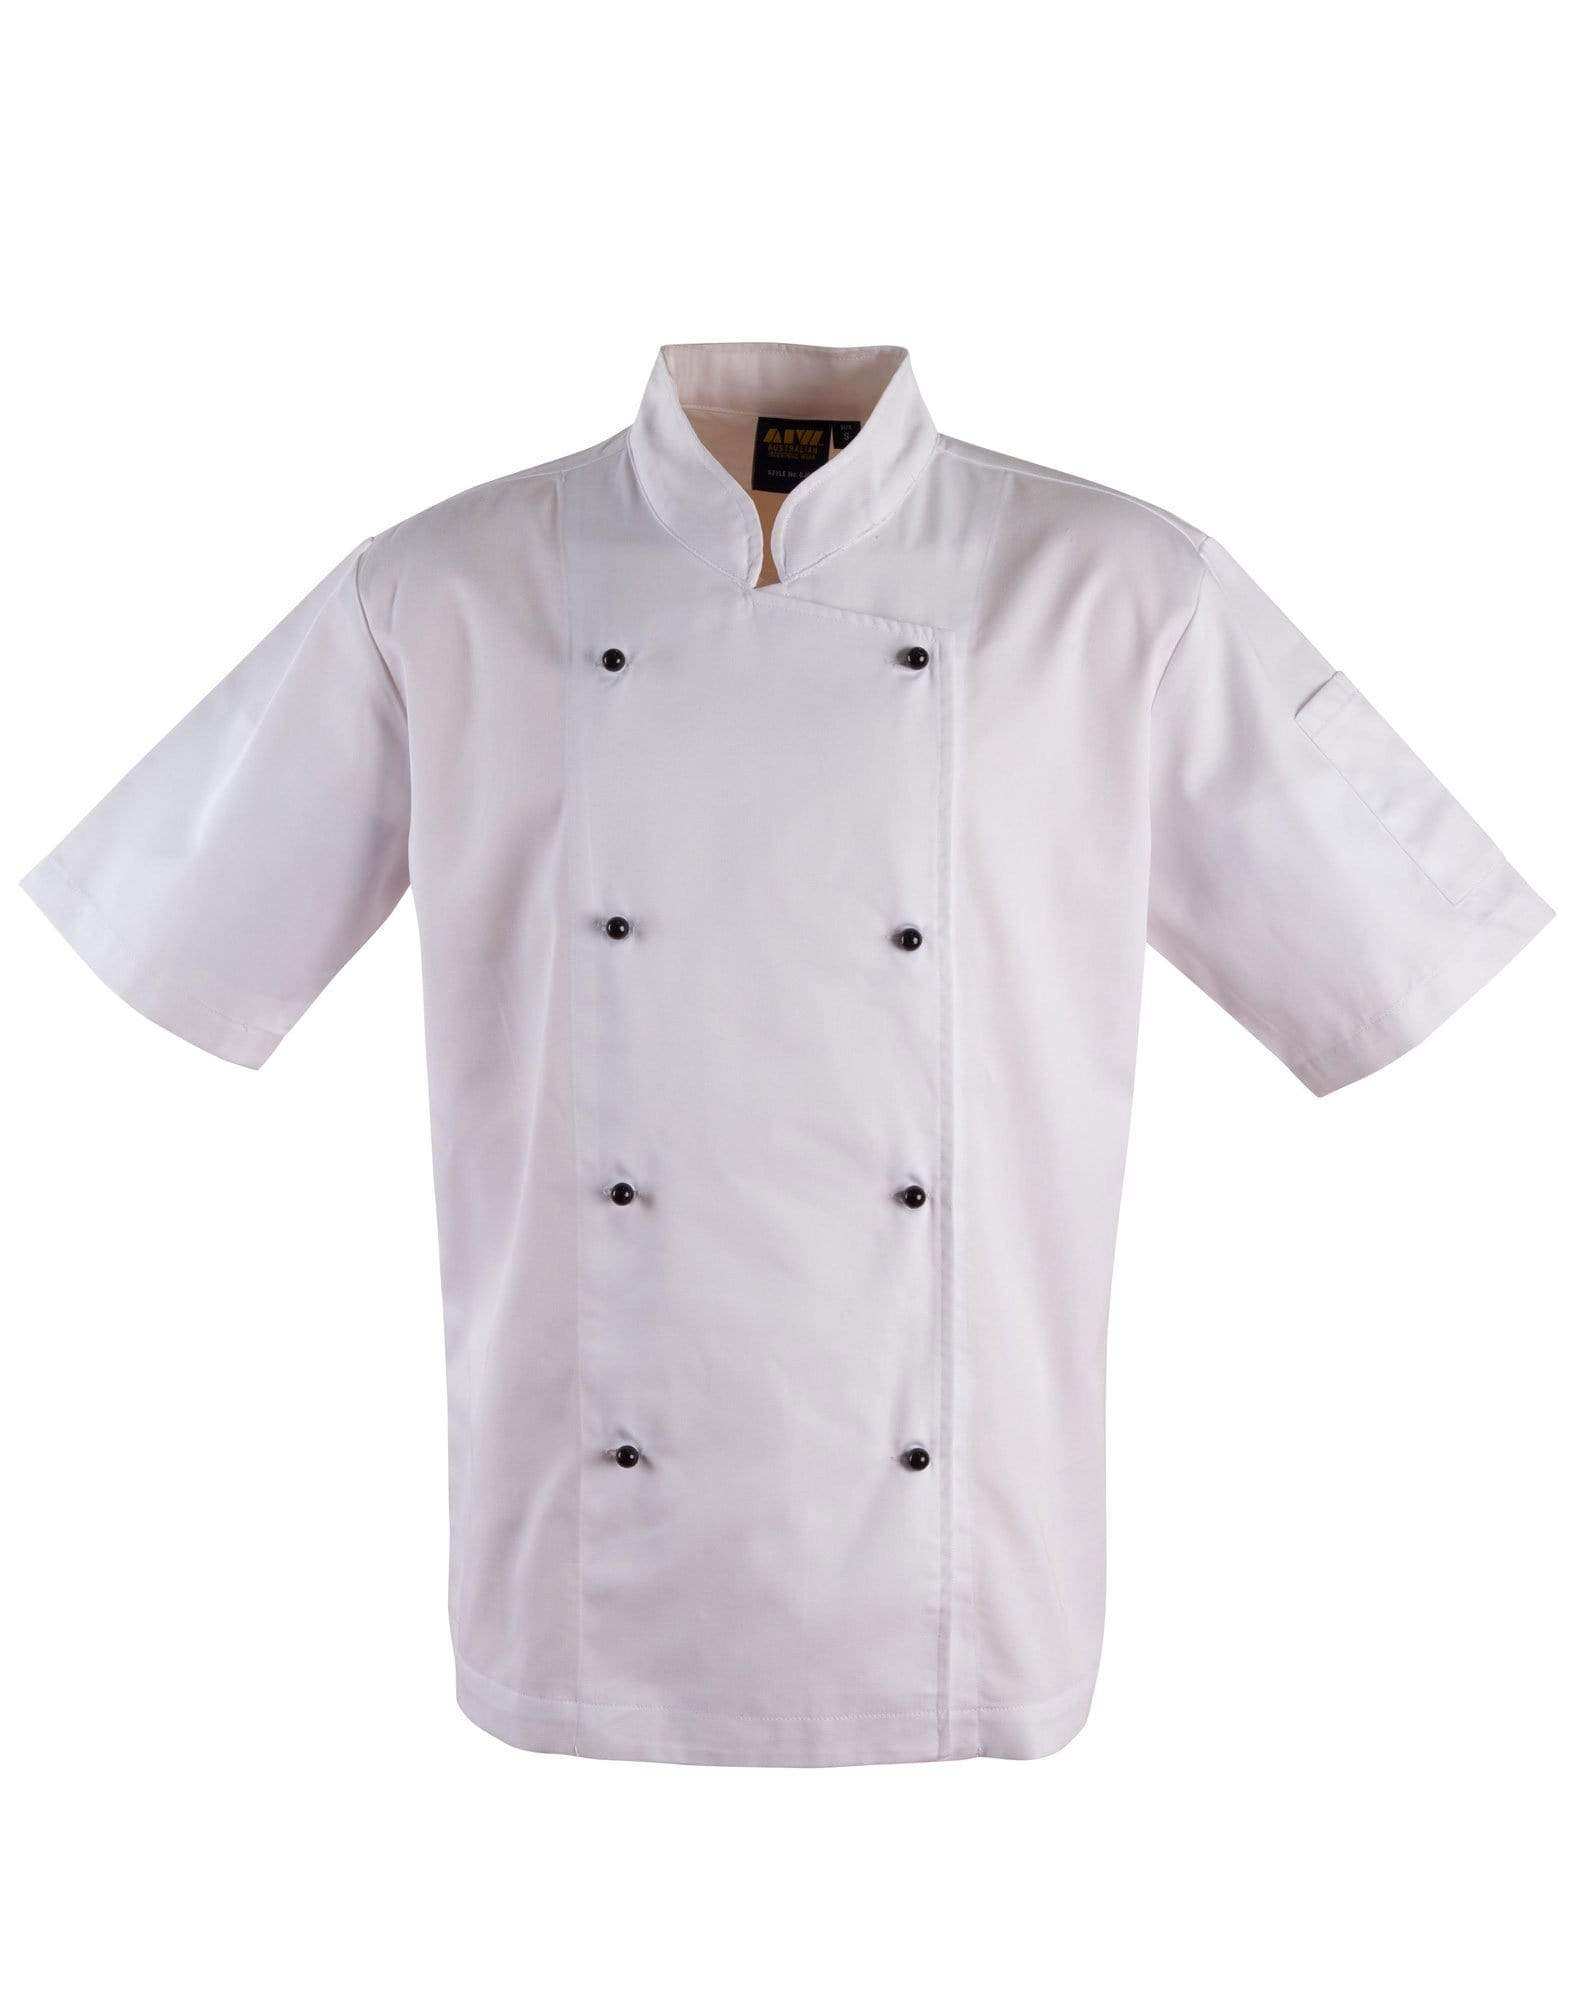 Chef’s Short Sleeve Jacket CJ02 Hospitality & Chefwear Australian Industrial Wear White 2XS 